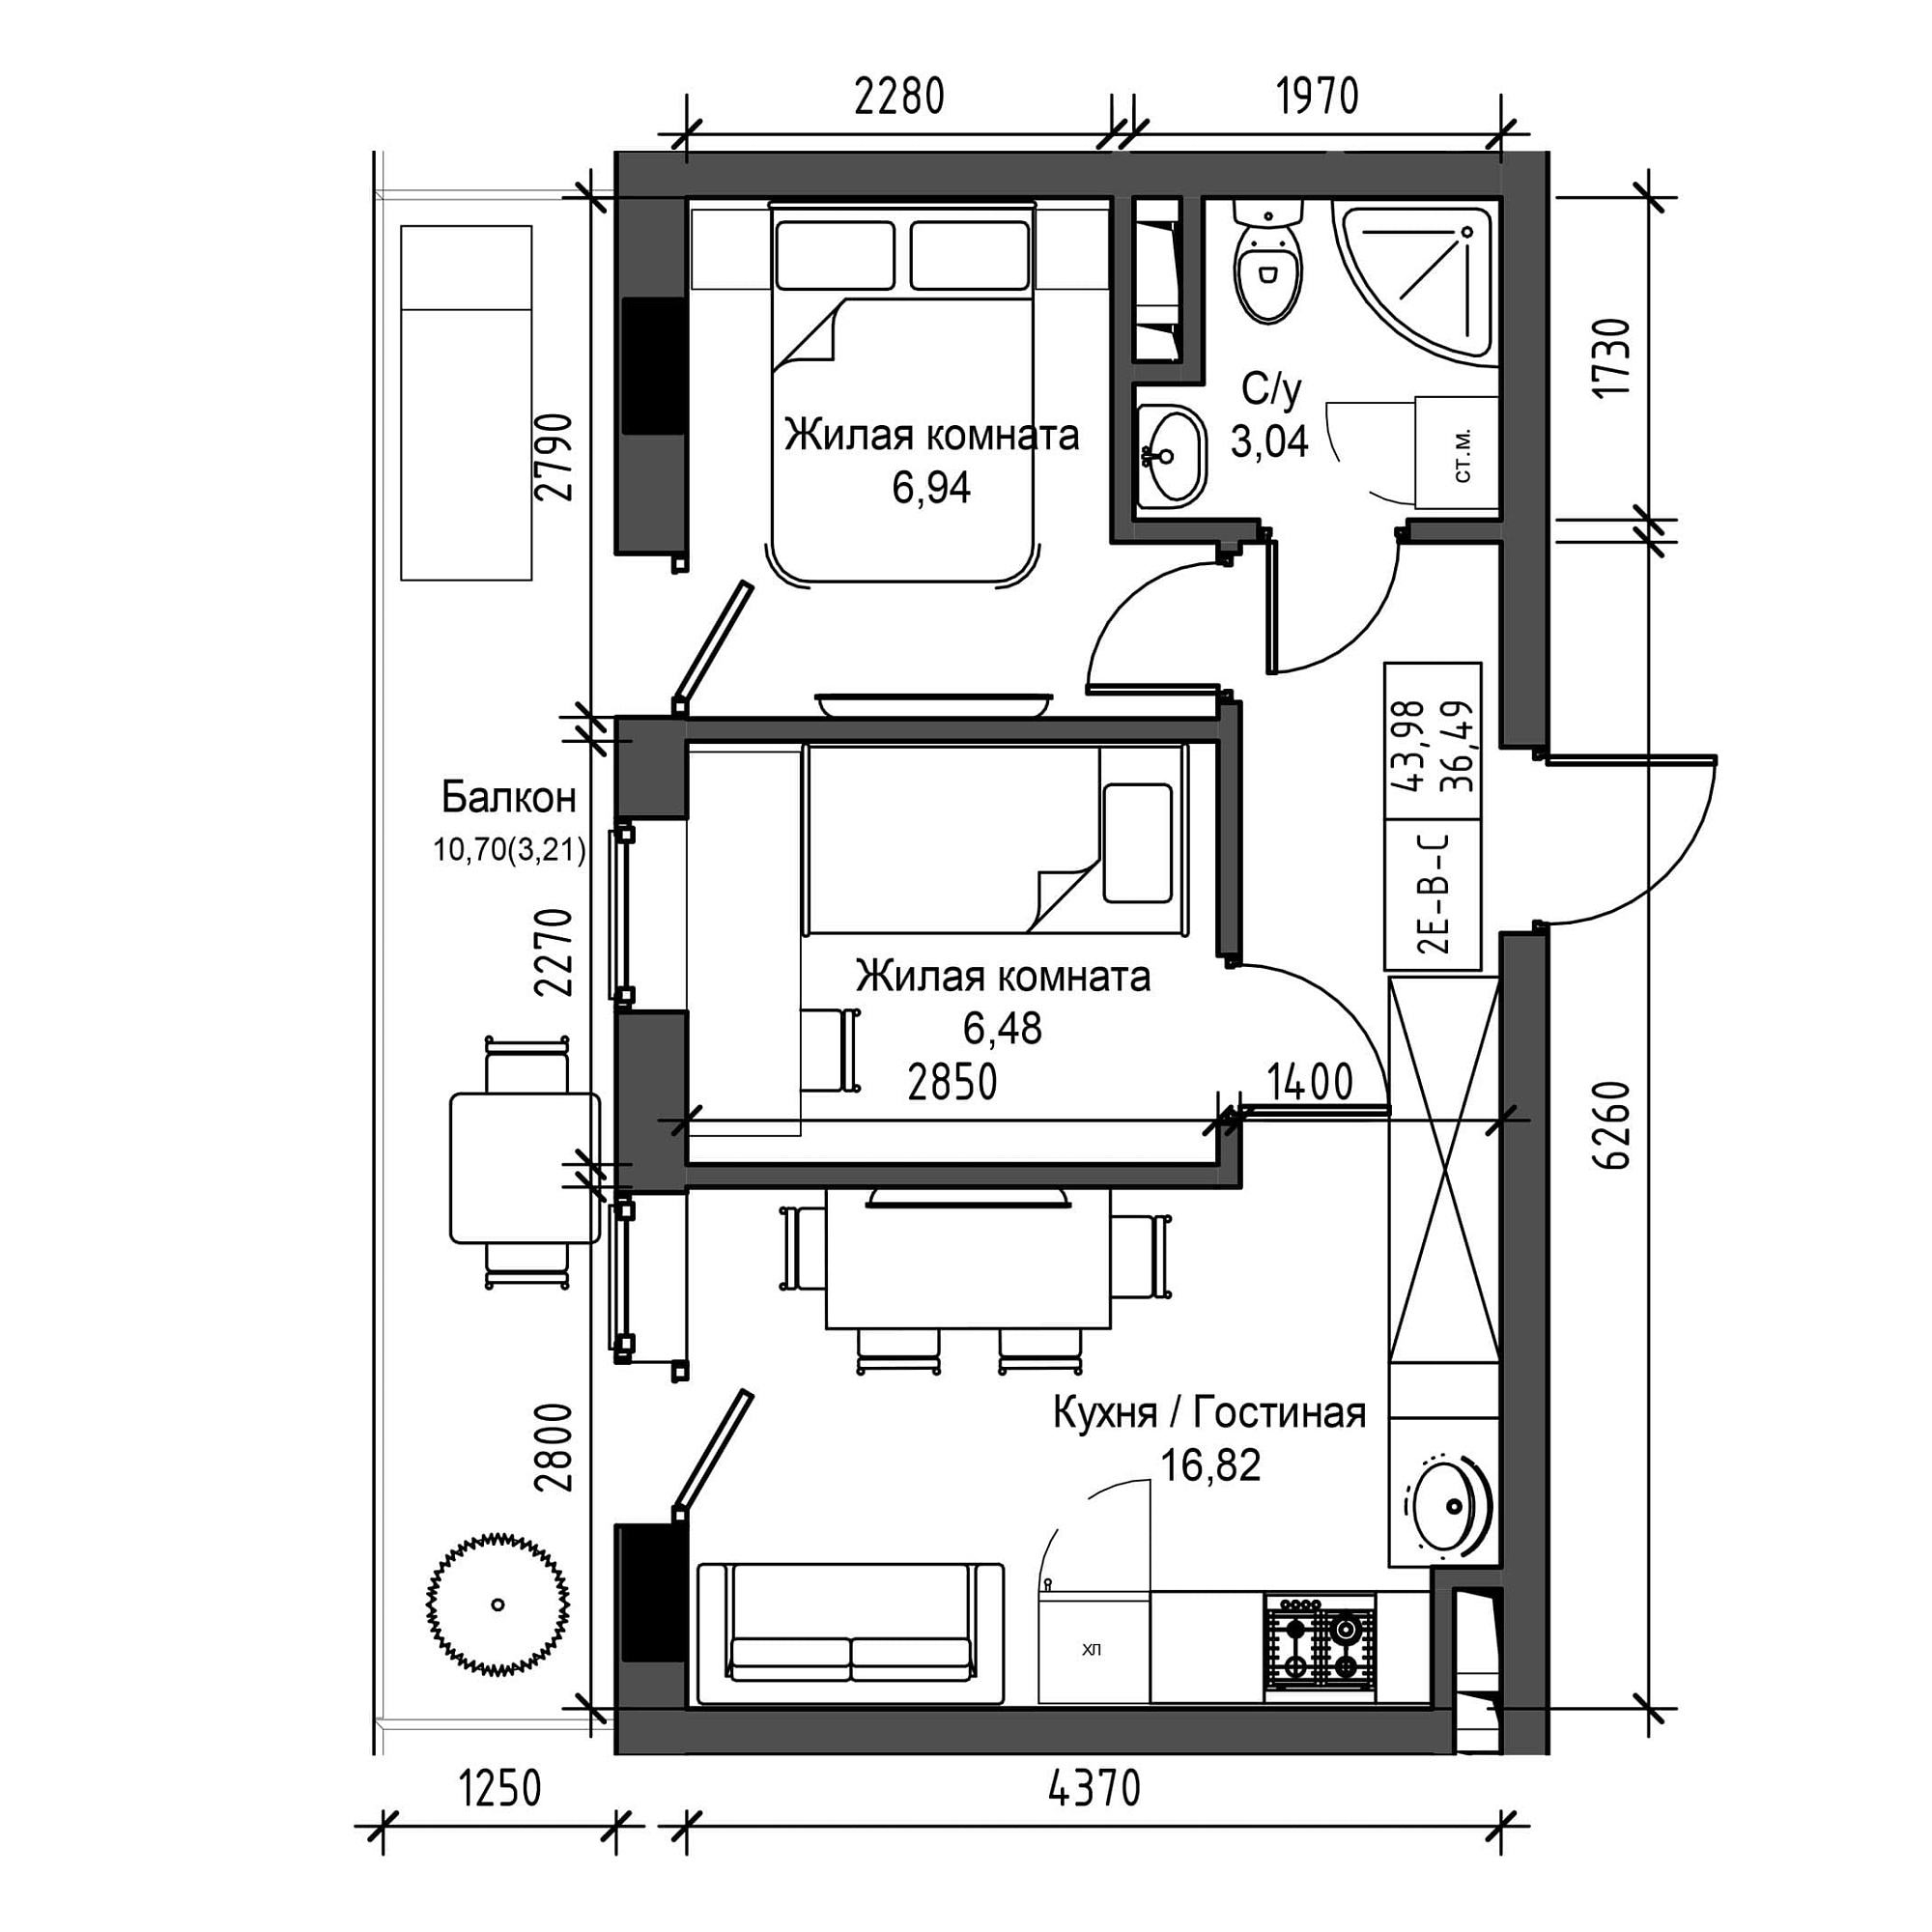 Planning 2-rm flats area 36.49m2, UM-001-06/0017.